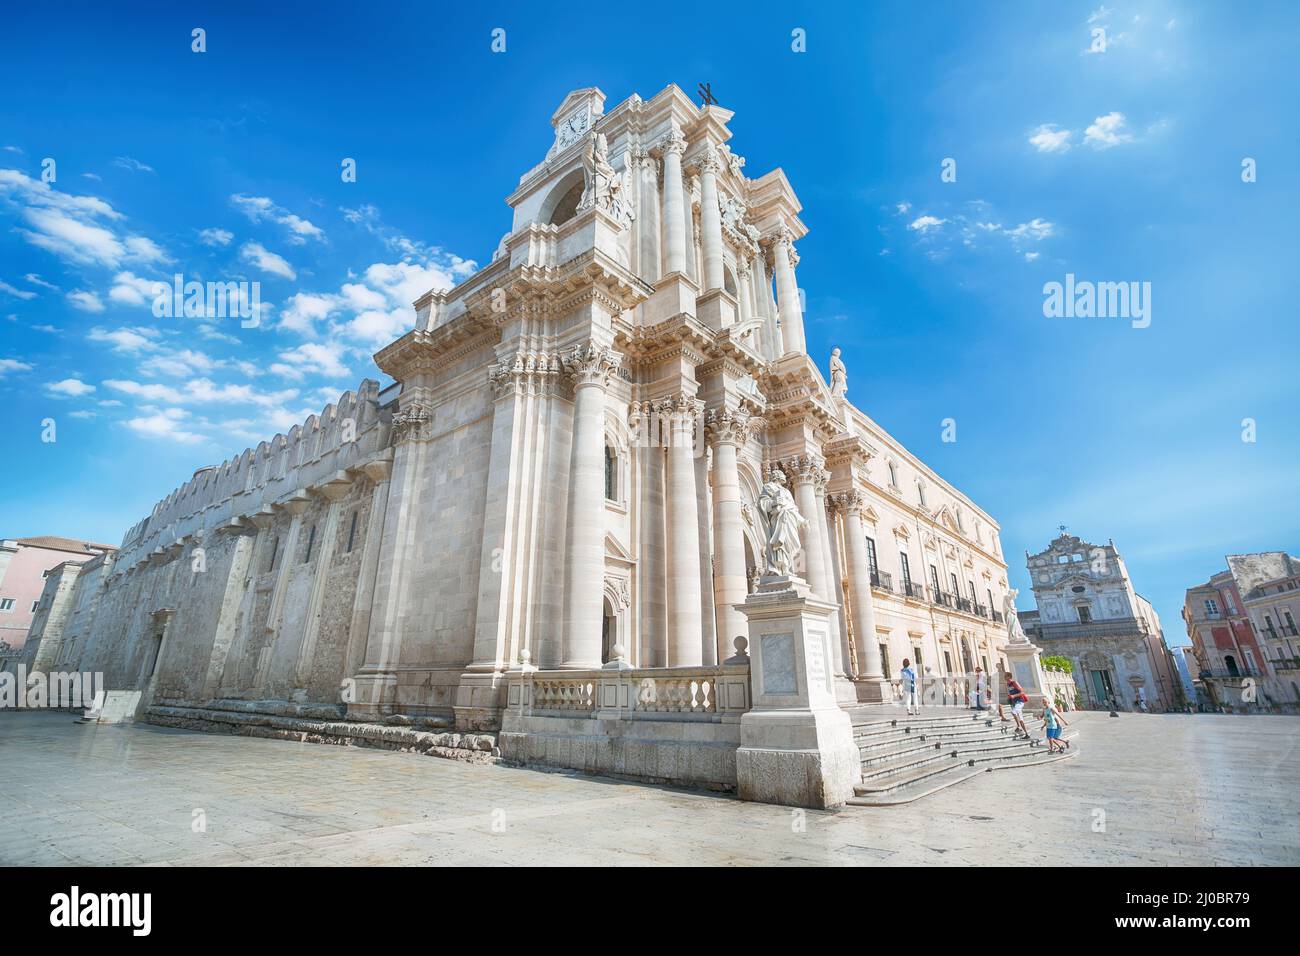 Reisefotografie aus Syrakus, Italien auf der Insel Sizilien. Cathedral Plaza Stockfoto